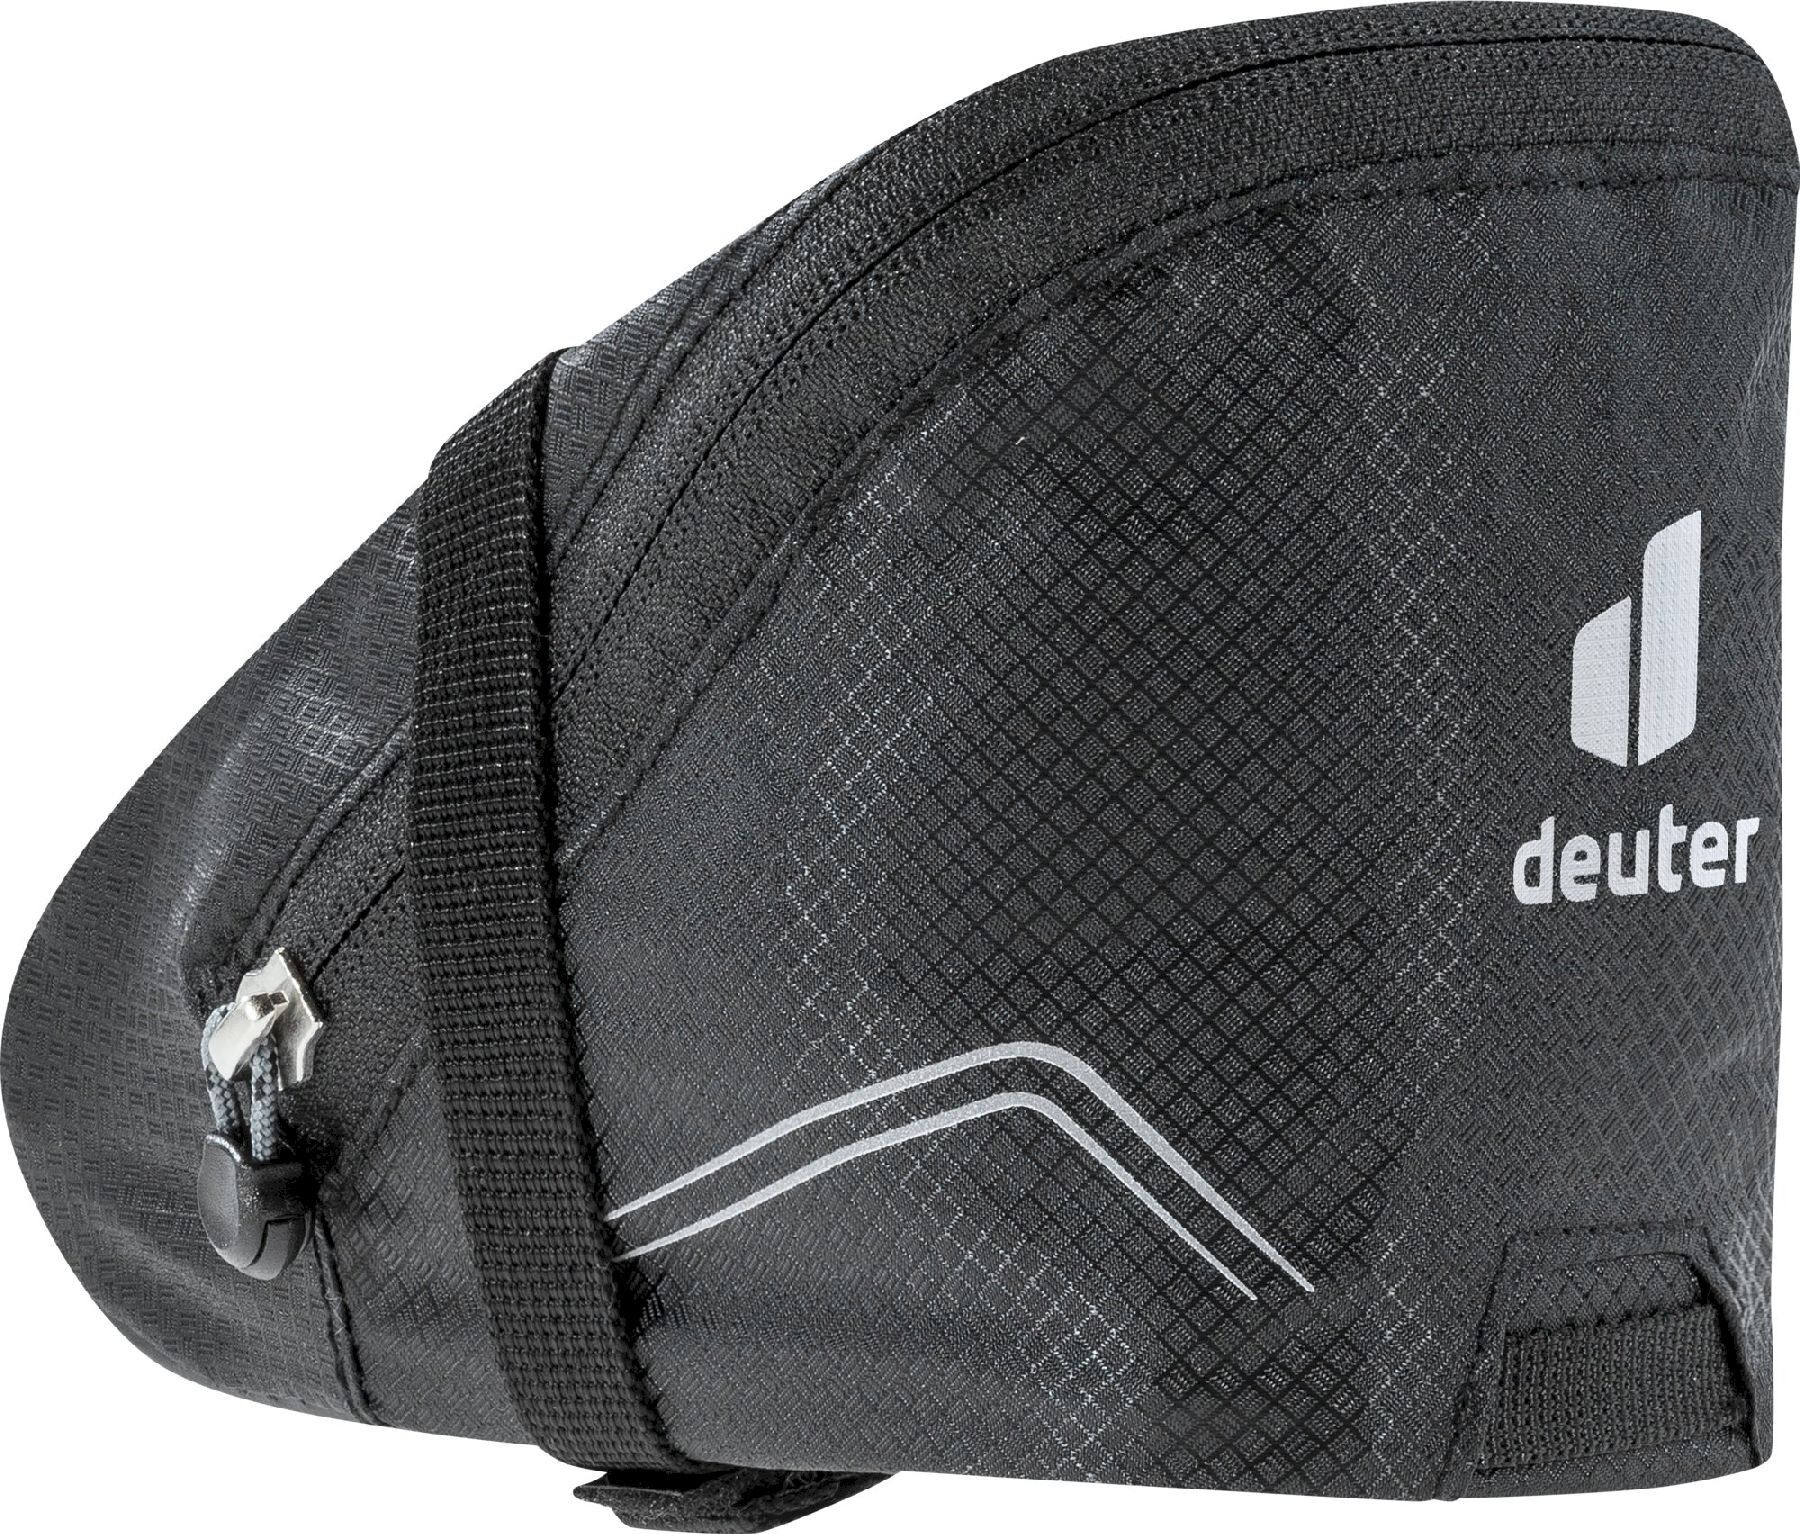 Deuter Bike Bag I - Satteltasche